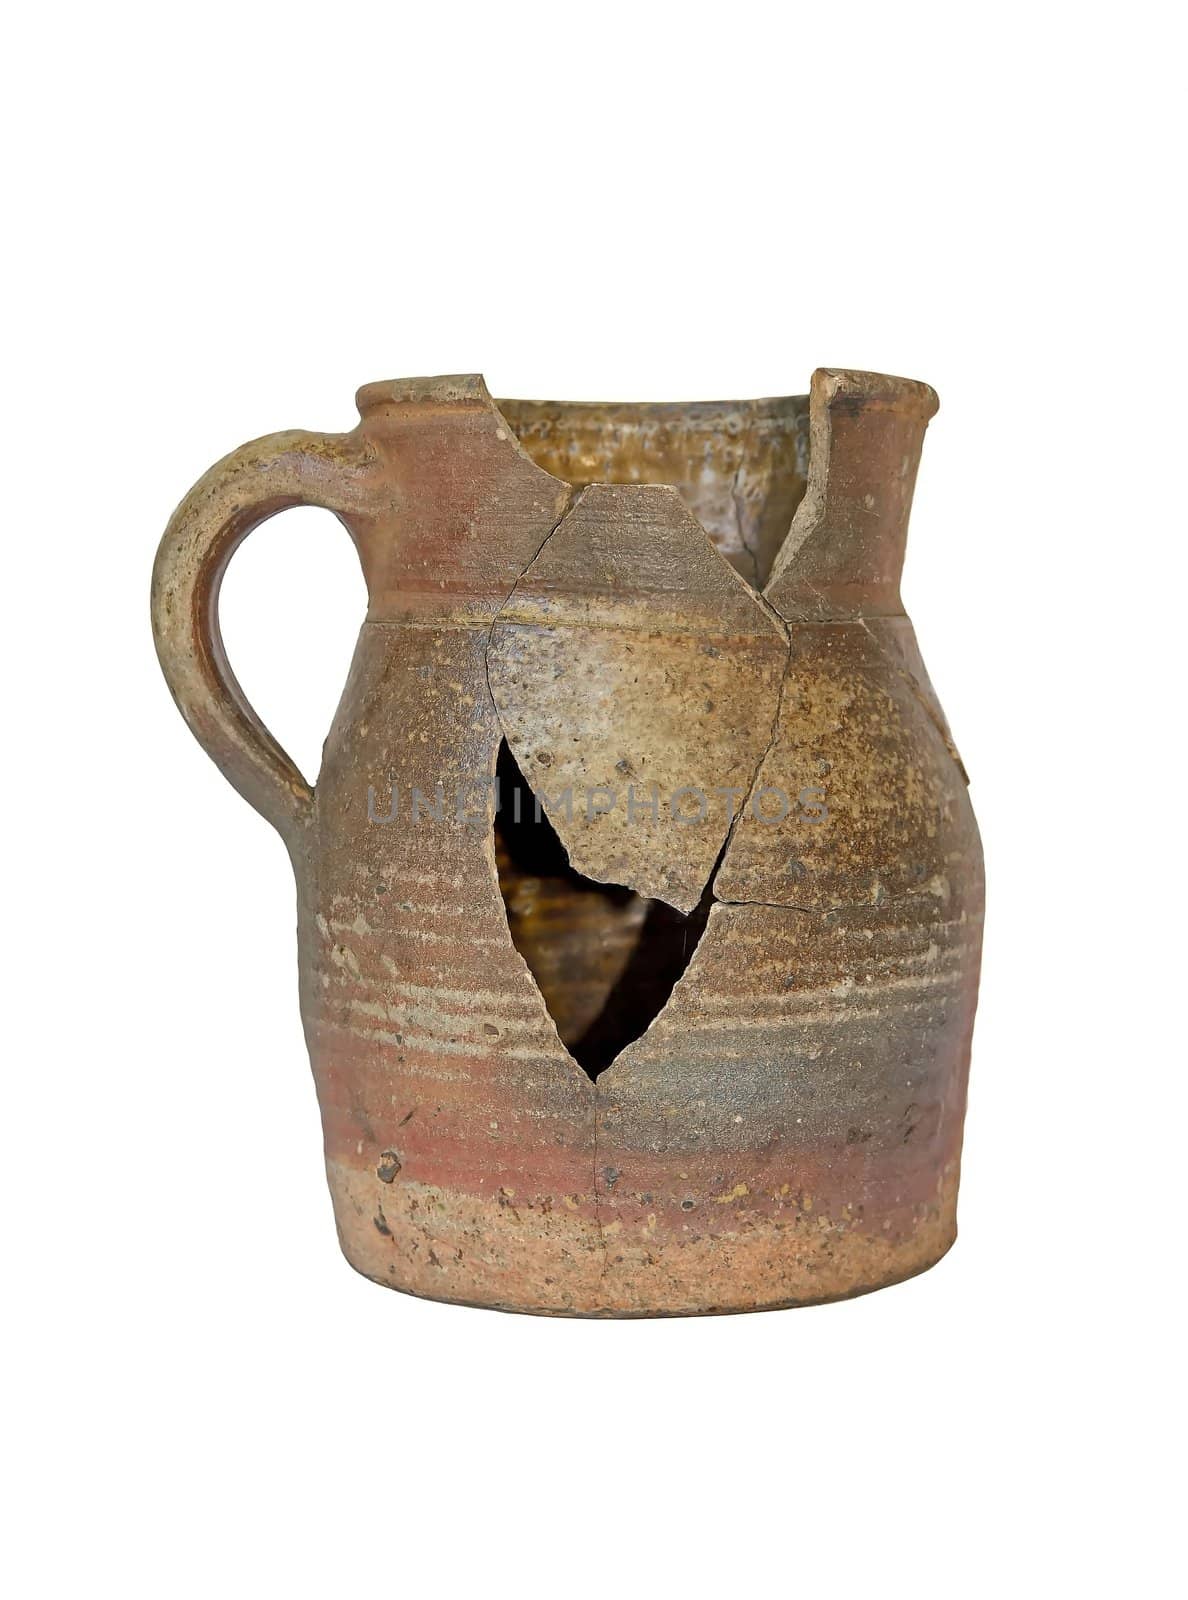 broken pot, a symbol of violence and failure